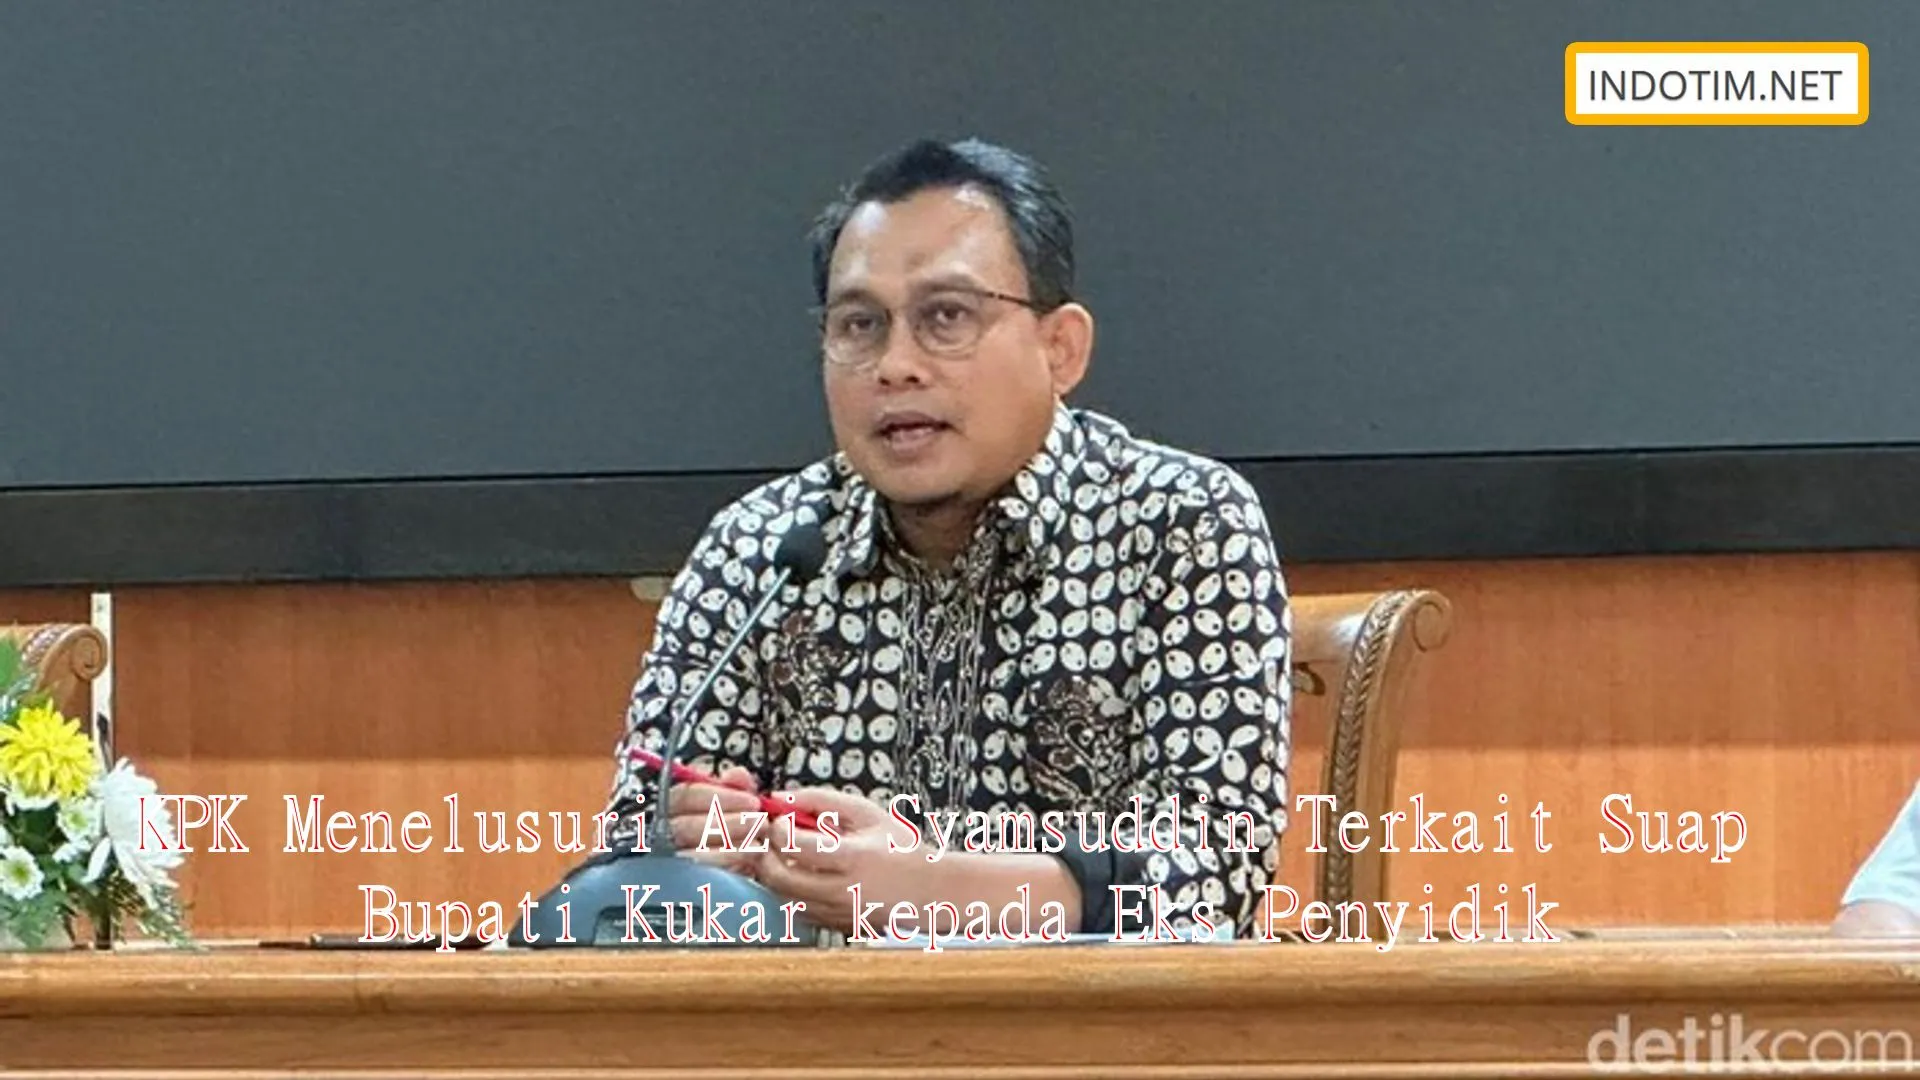 KPK Menelusuri Azis Syamsuddin Terkait Suap Bupati Kukar kepada Eks Penyidik